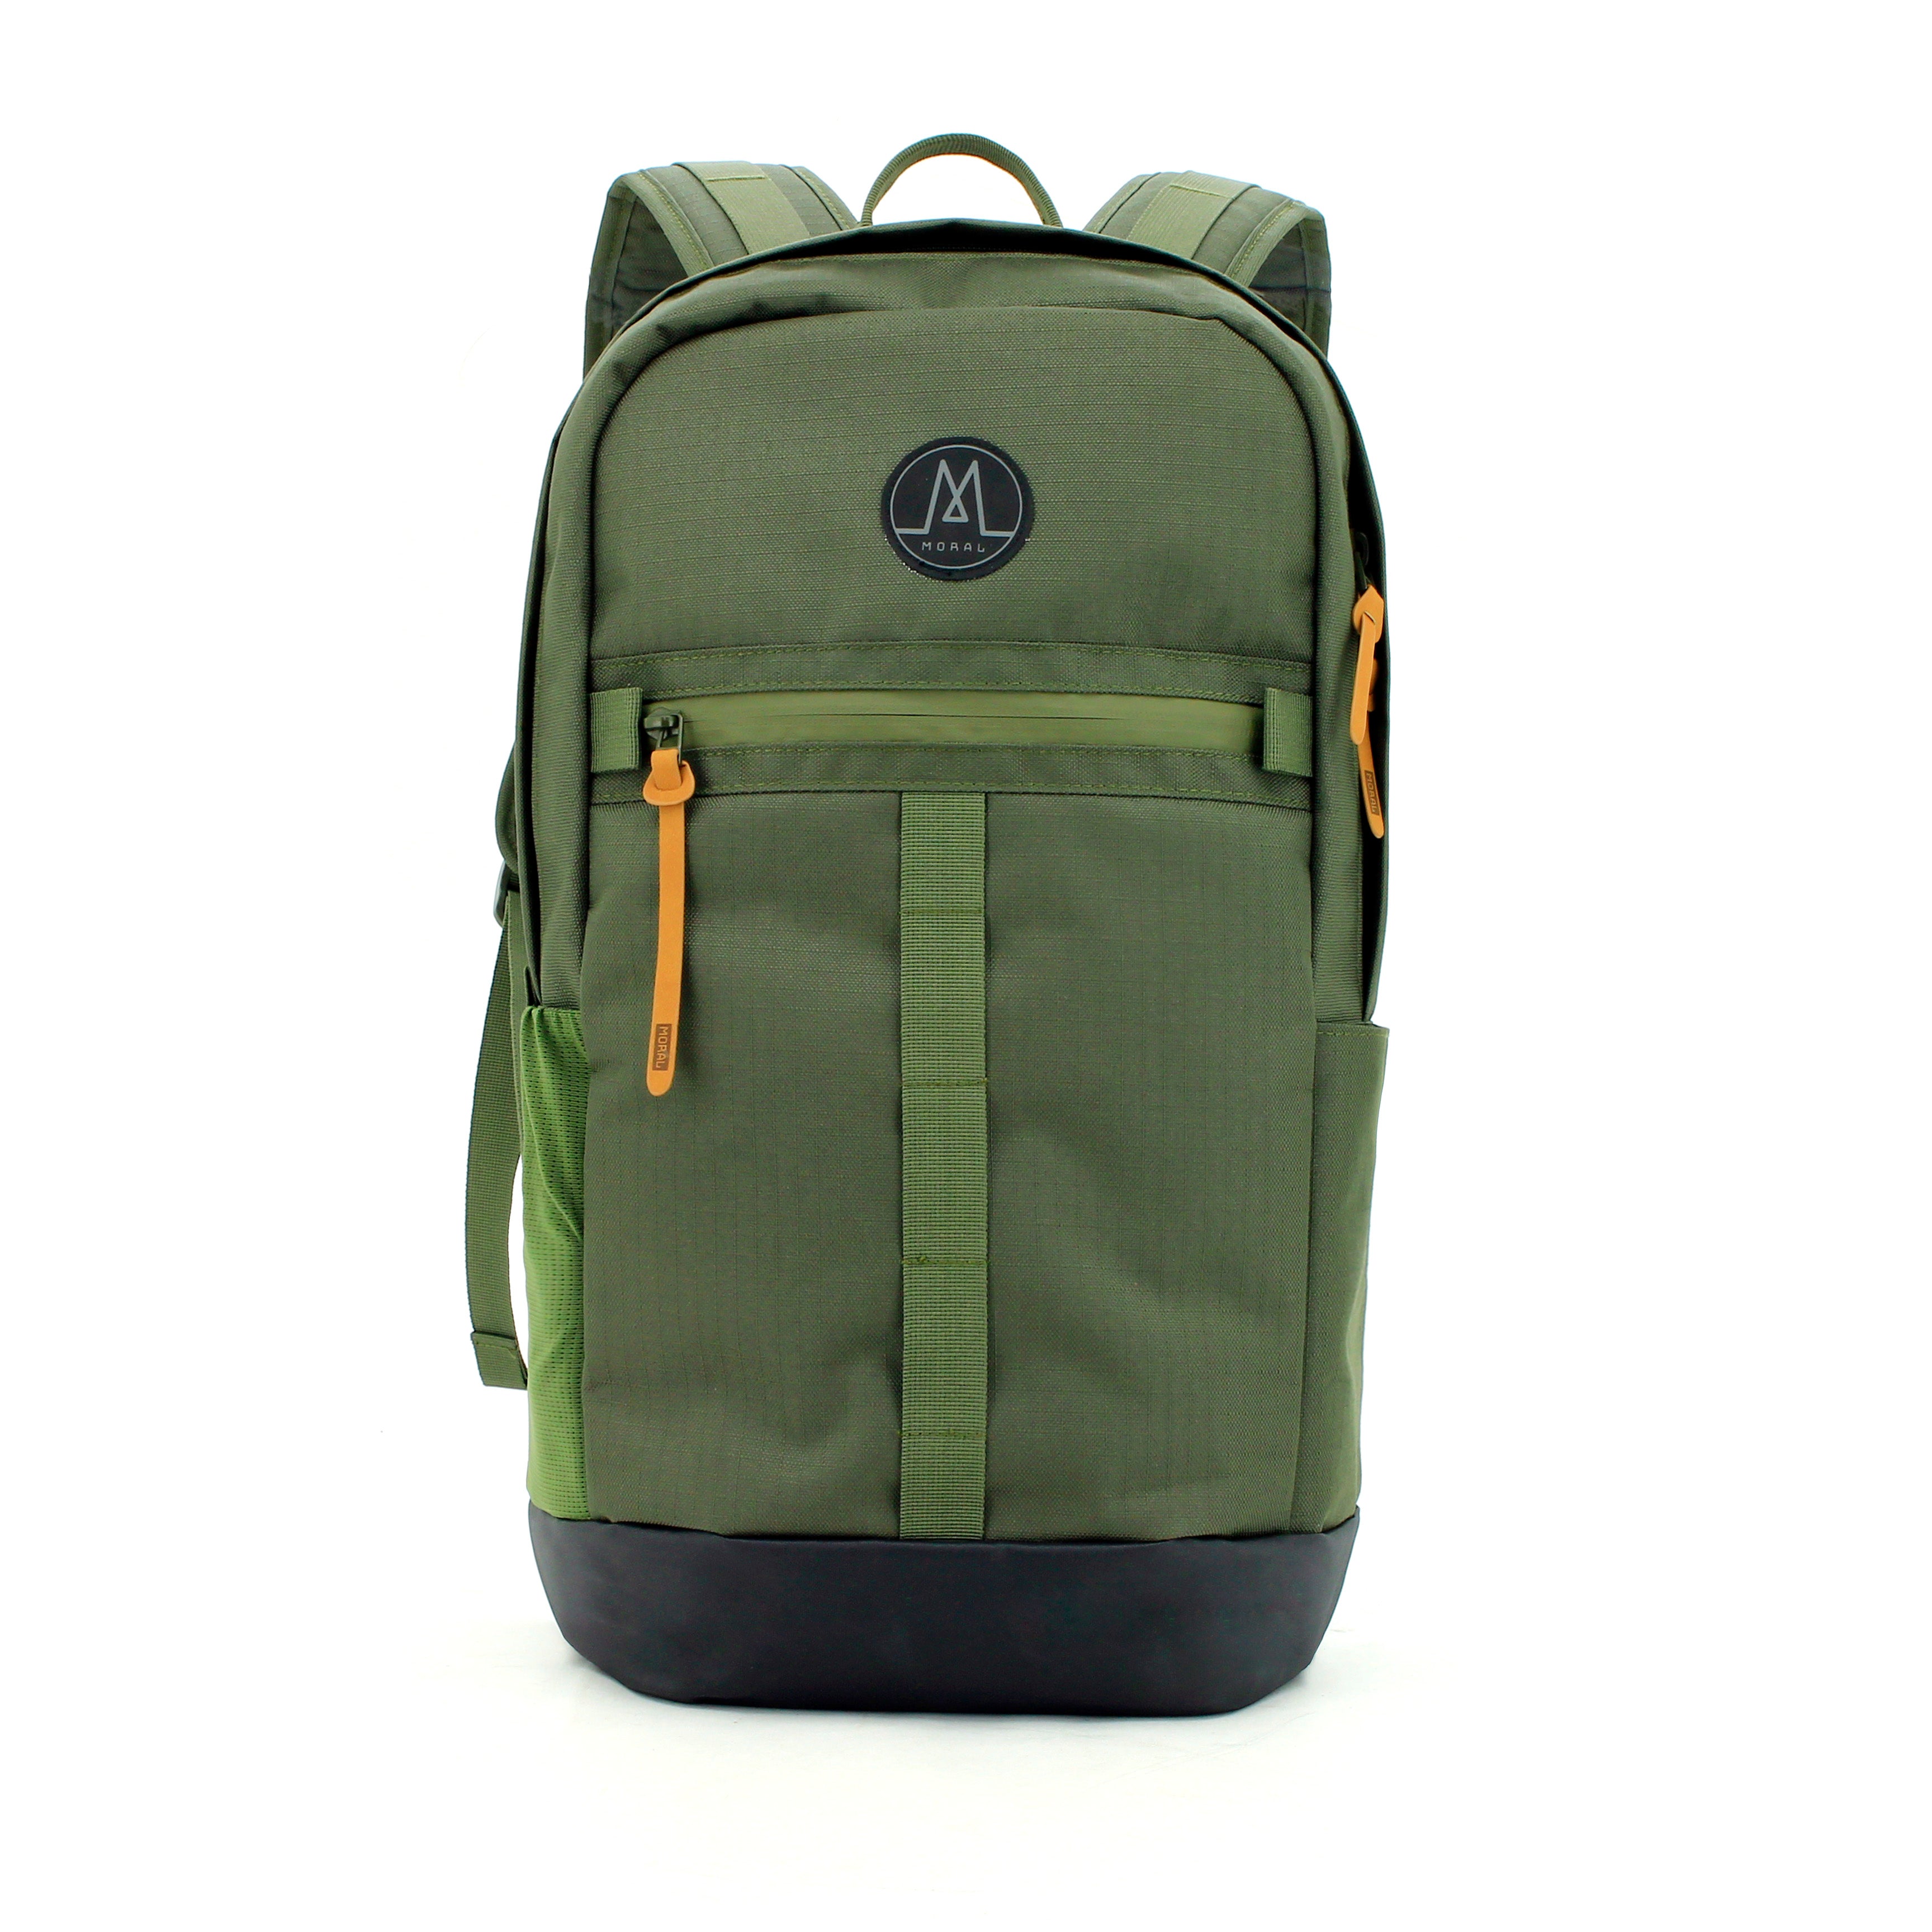 Napier backpack - Moral Bags